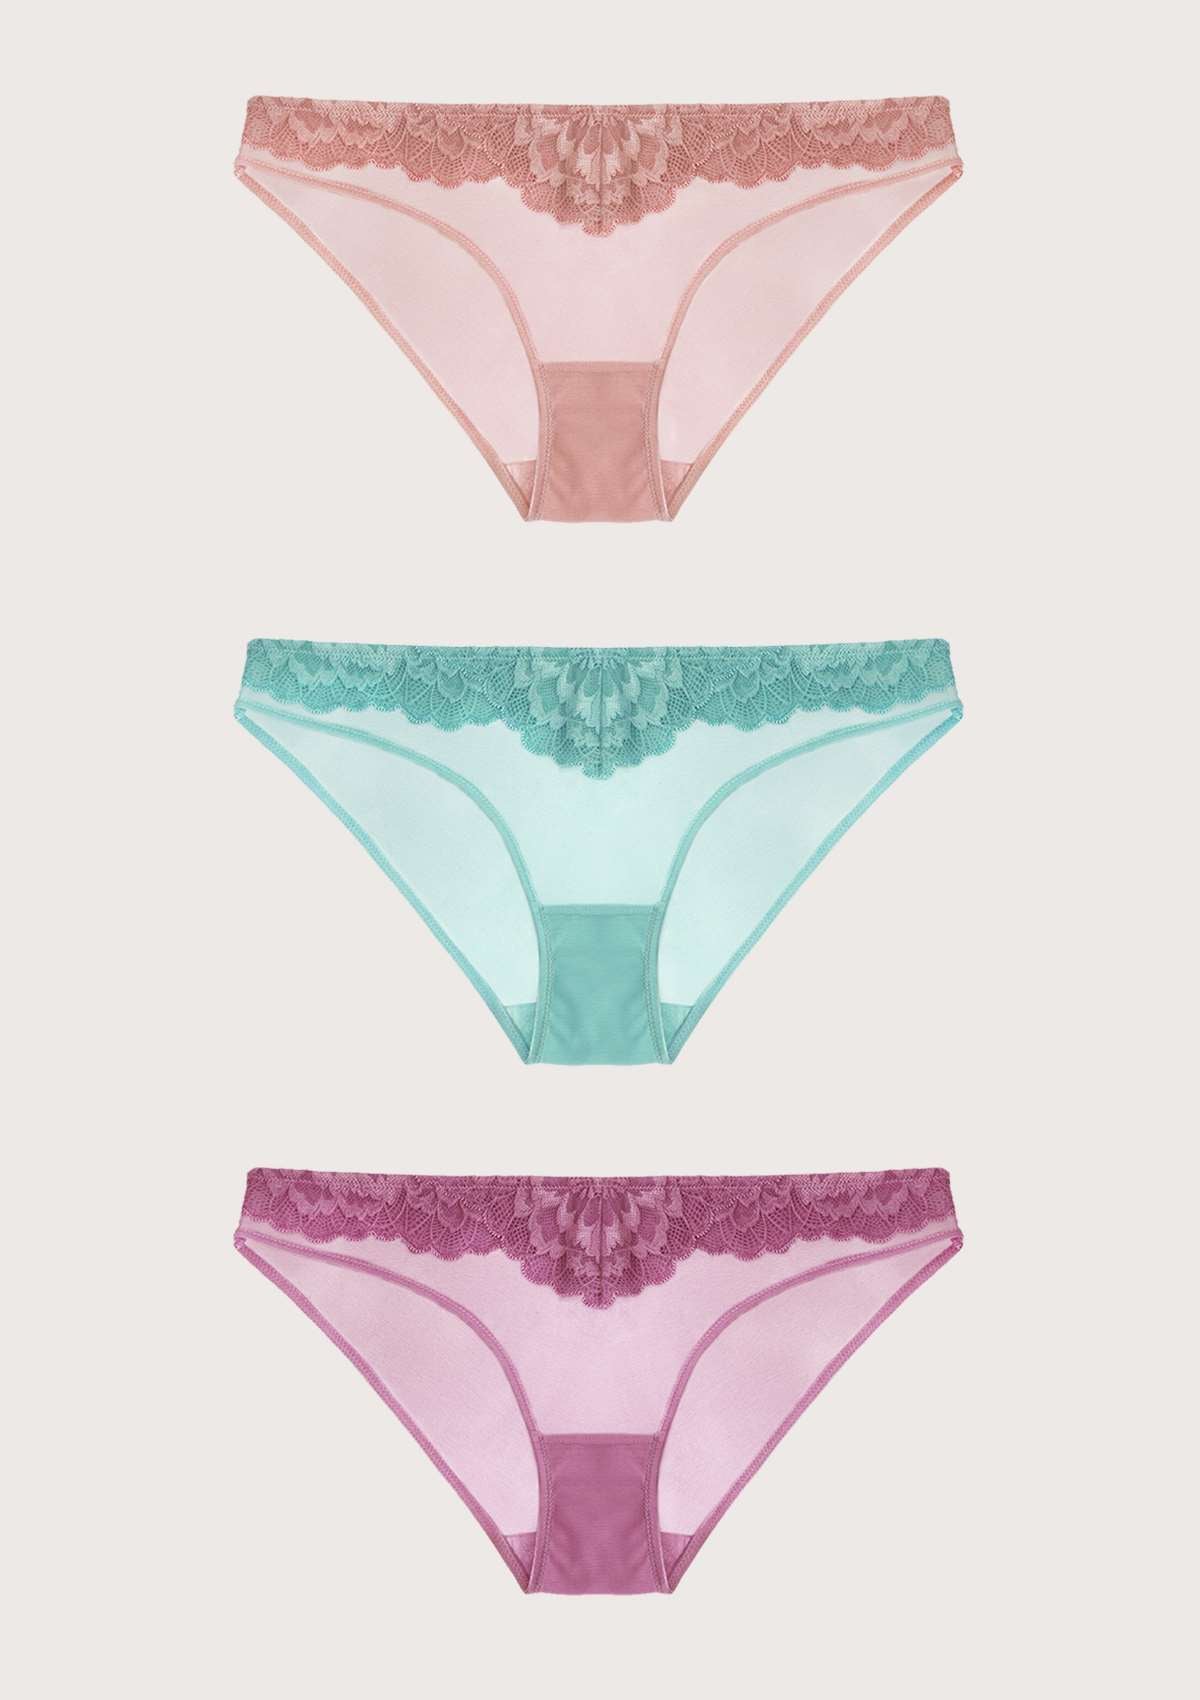 HSIA Peony Lace Mesh Everyday Bikini Underwear 3 Pack - S / Light Coral+Green+Purple